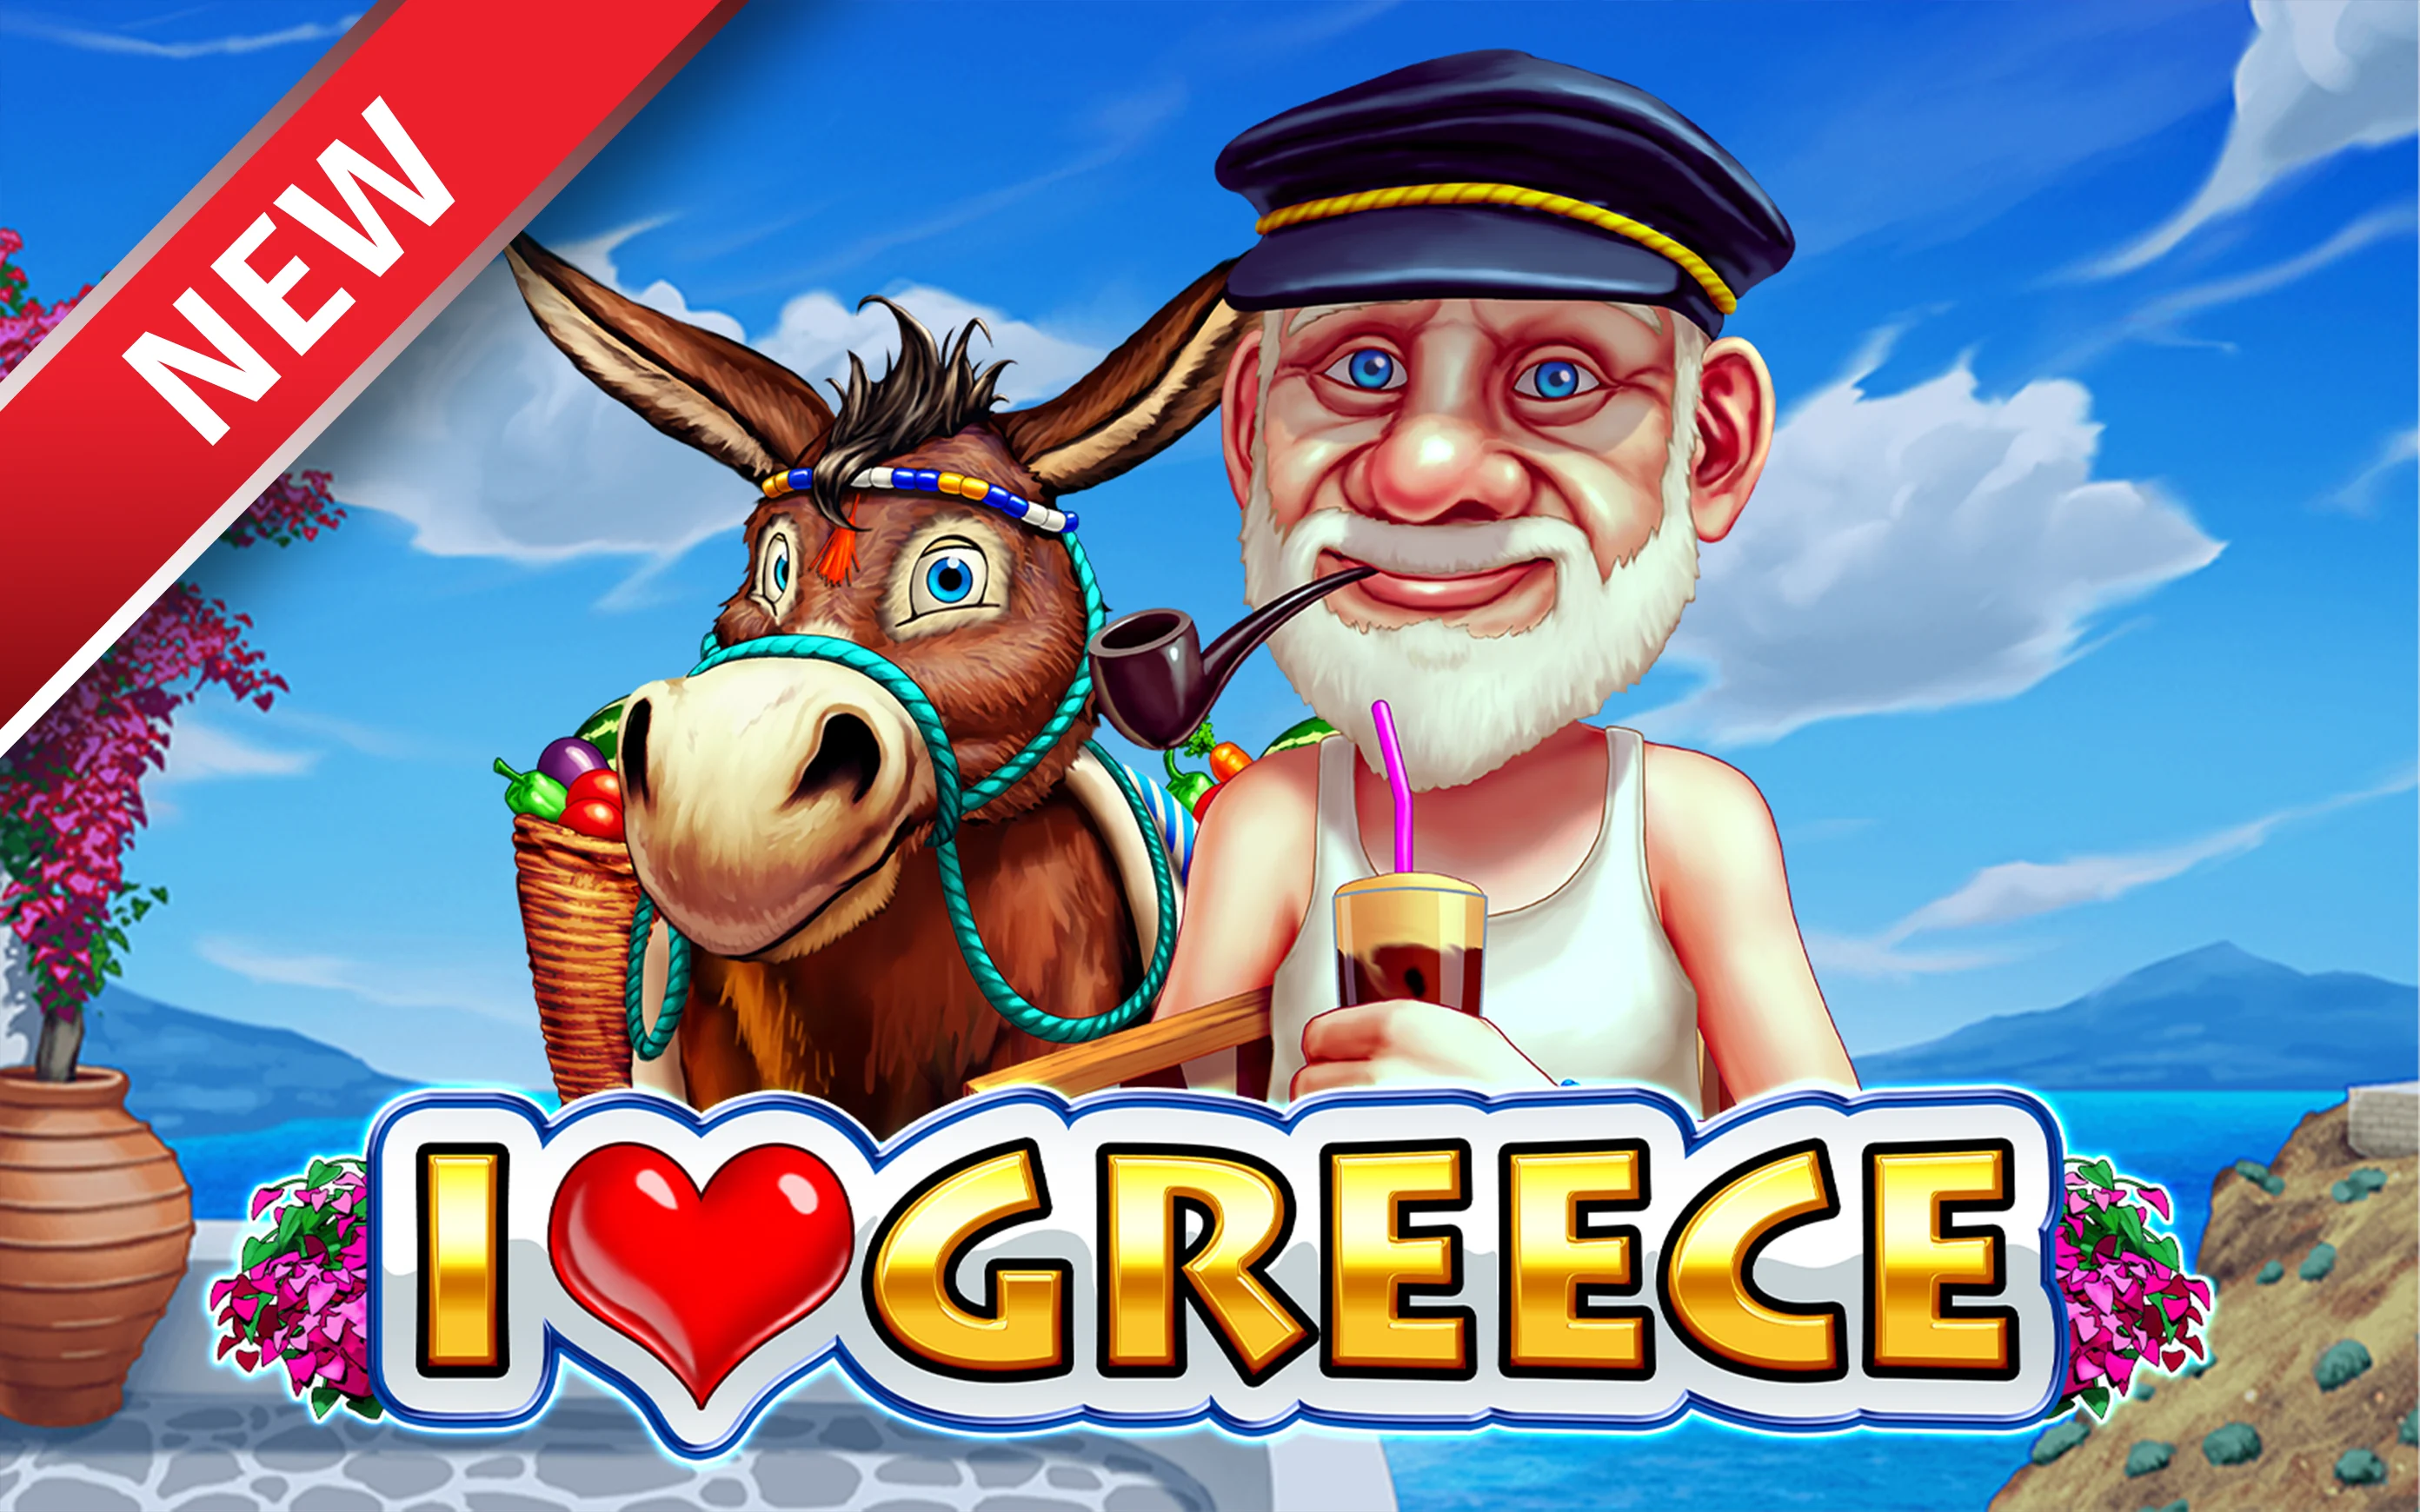 Play I Love Greece on Starcasino.be online casino